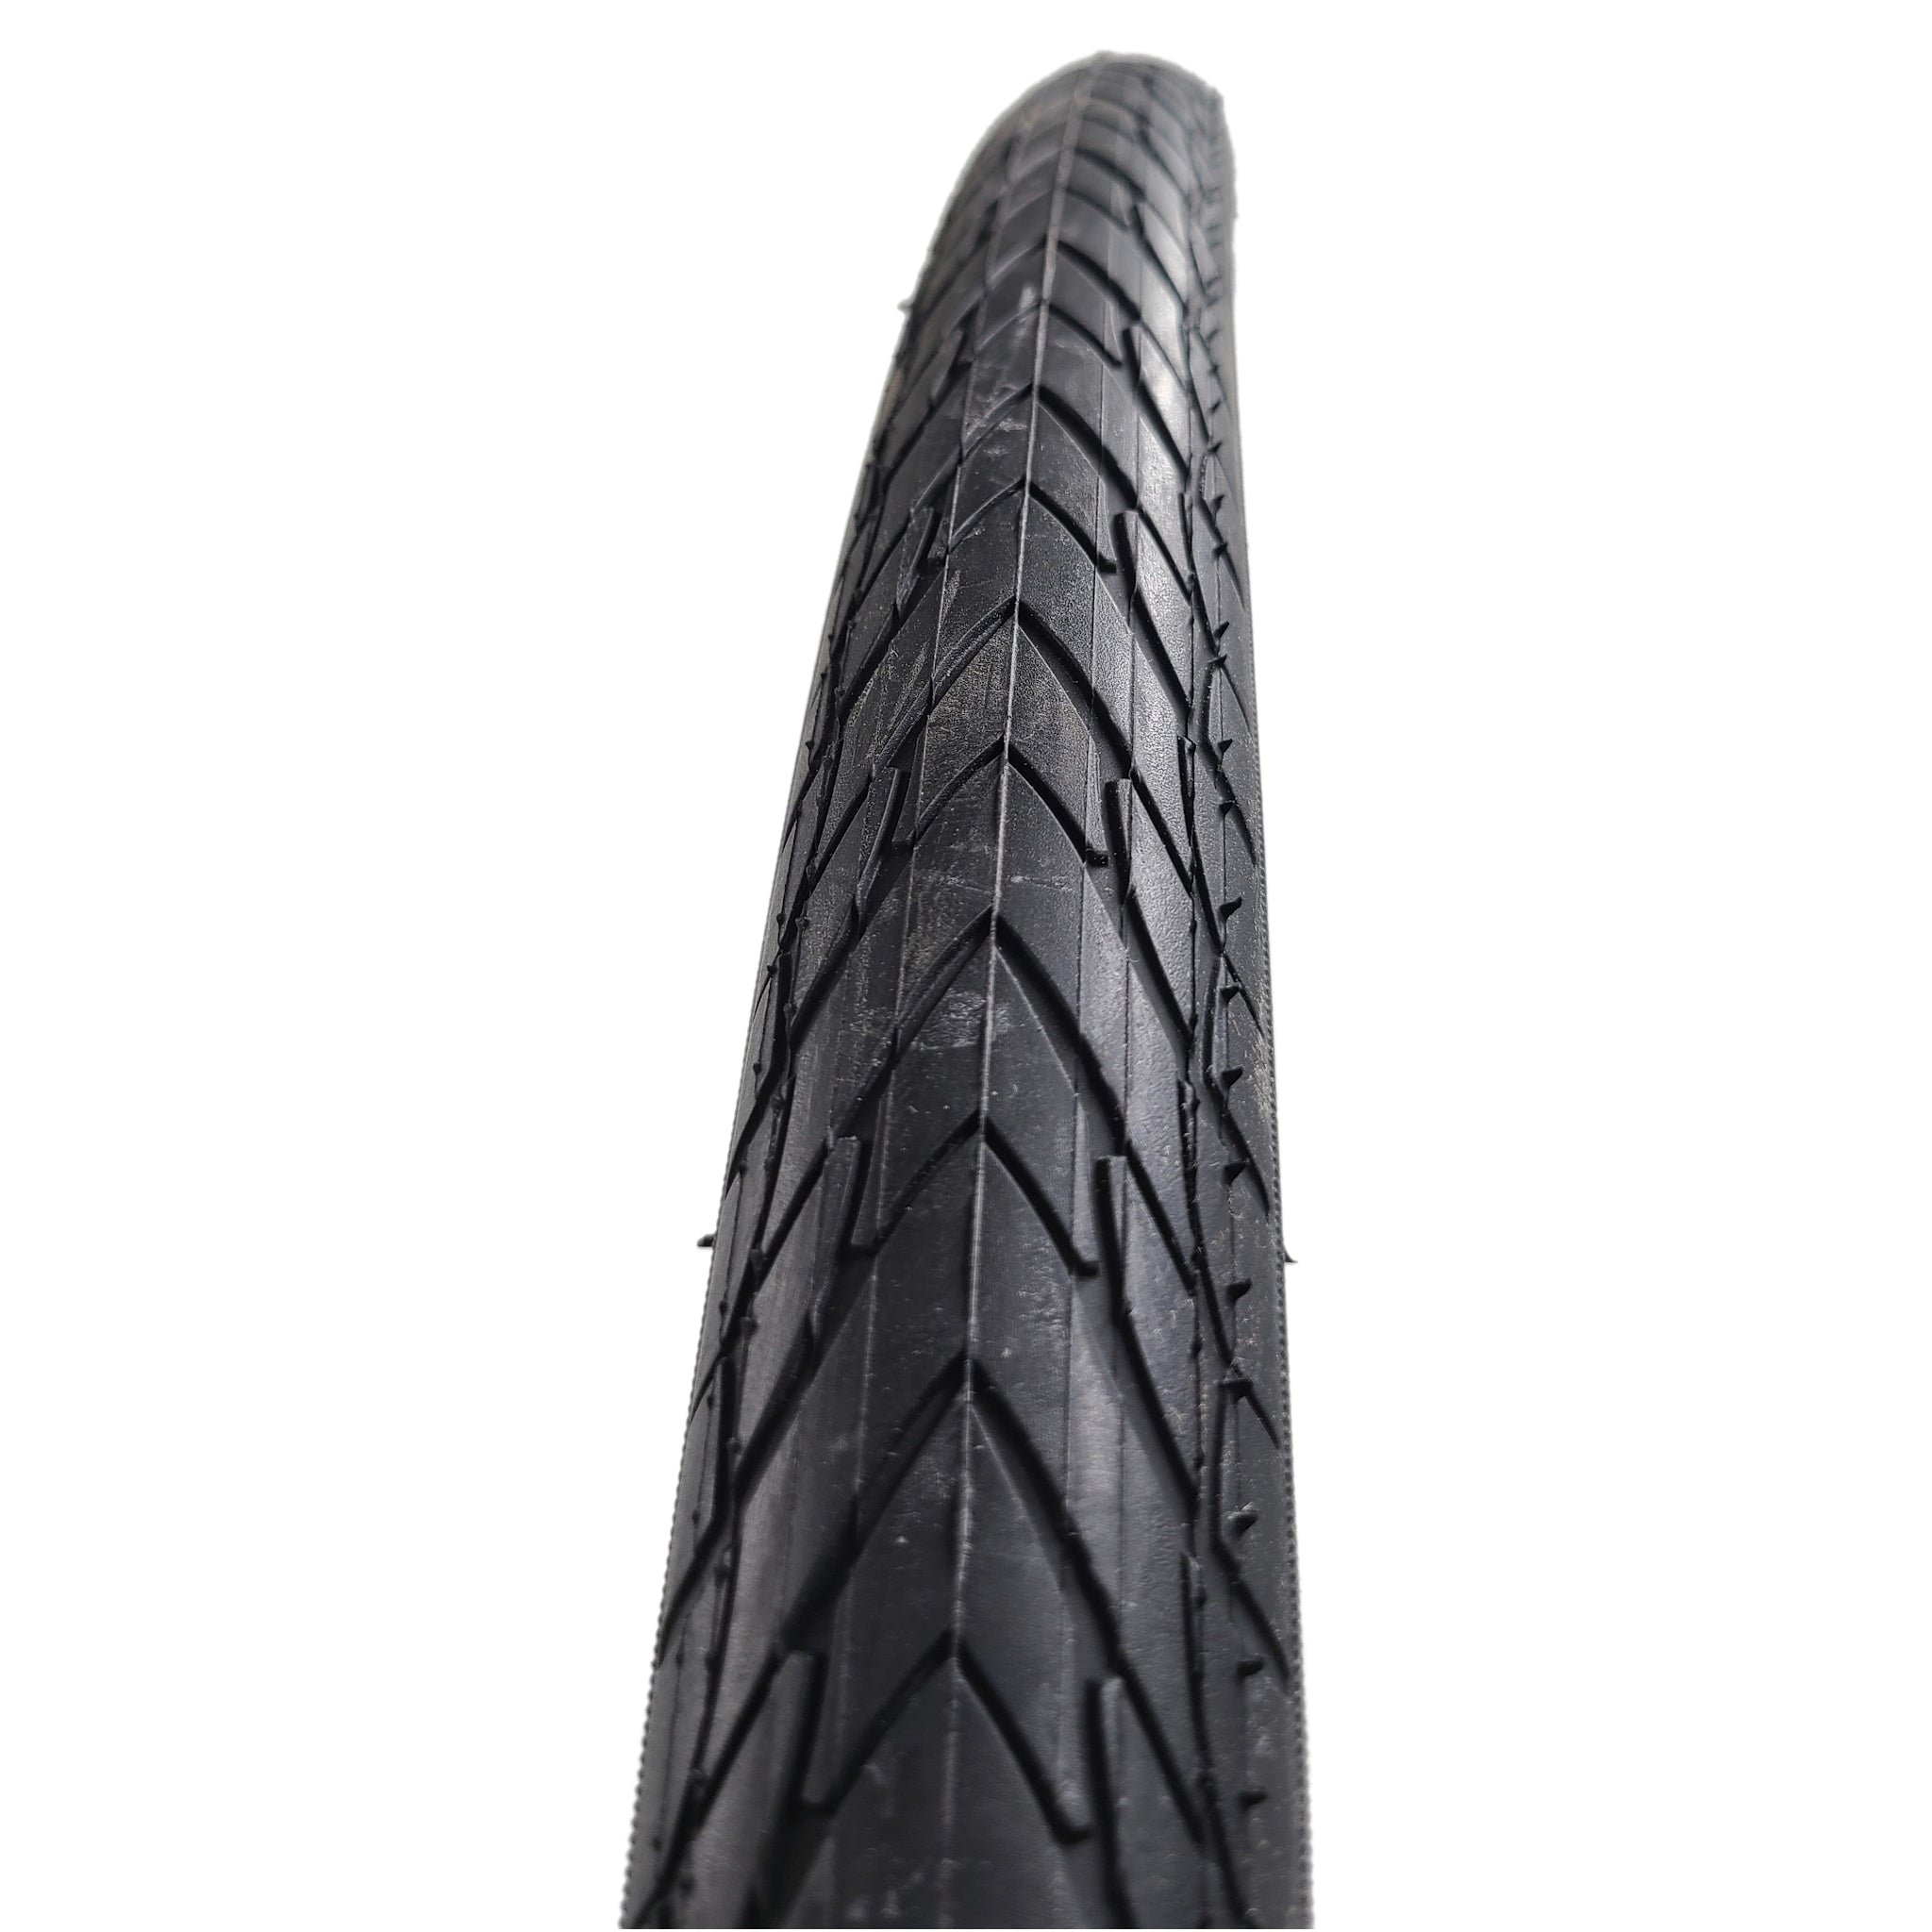 Michelin Protek 26" Anti Puncture Reflective Tire - The Bikesmiths